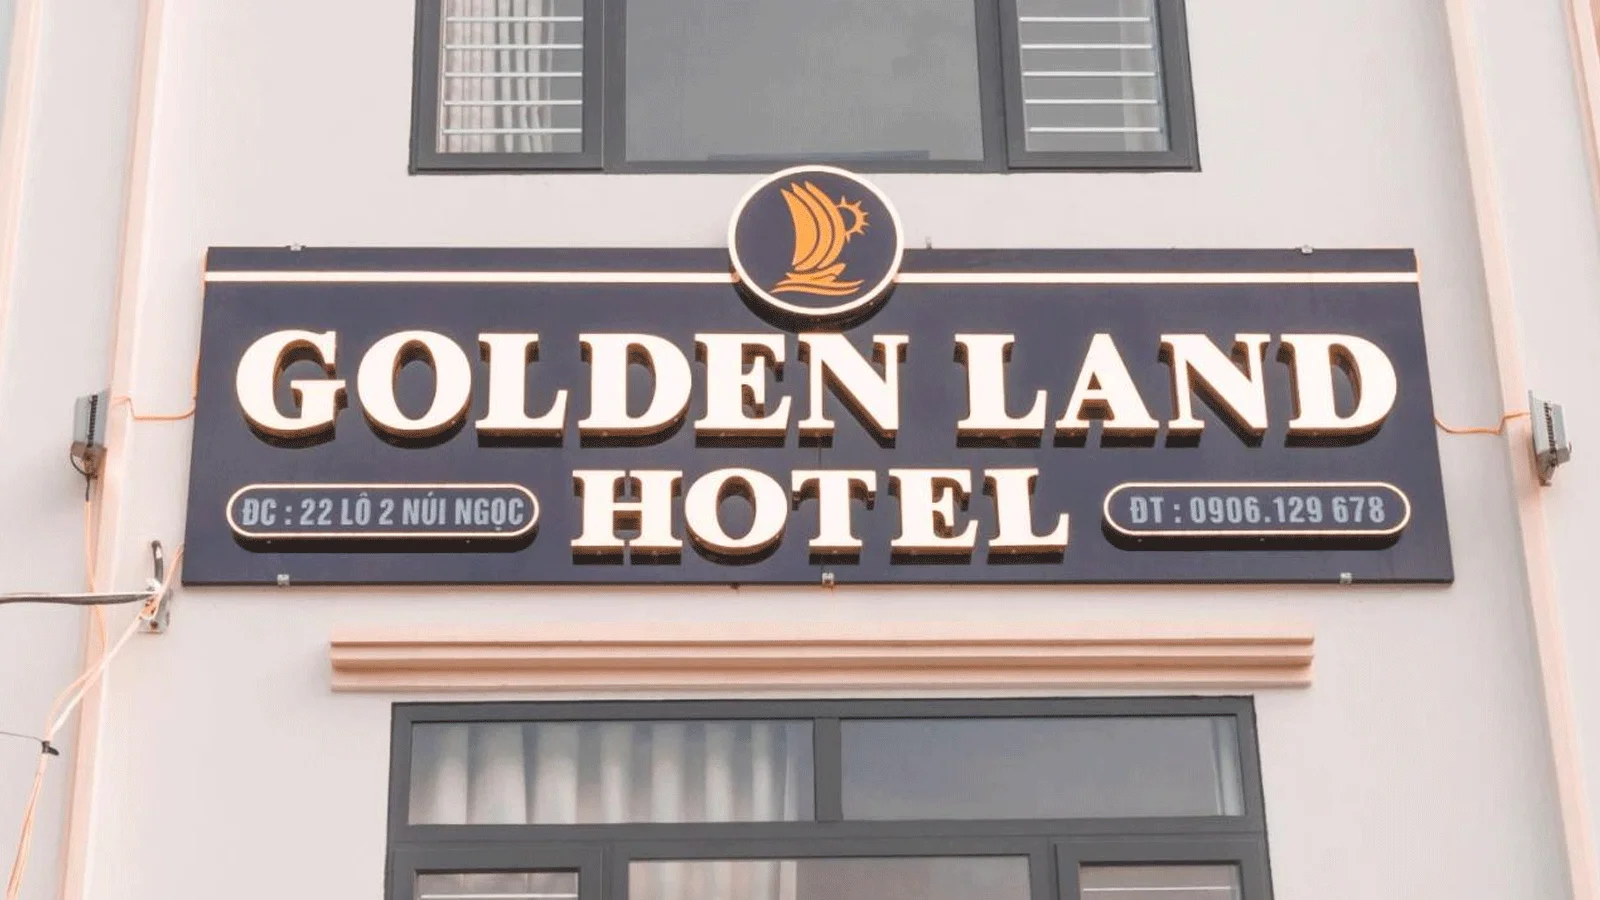 Khách sạn Golden Land Hotel Cát Bà